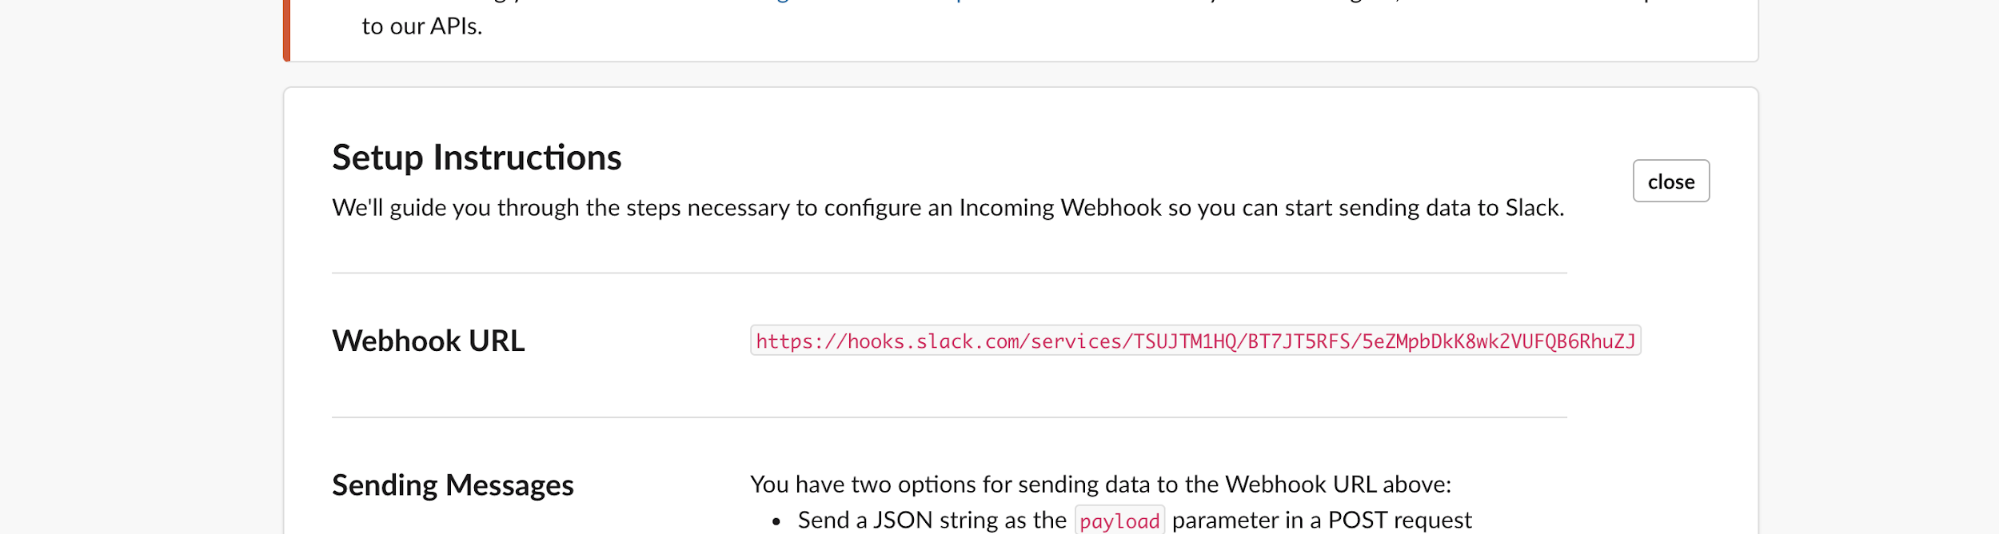 Displayed webhook URL